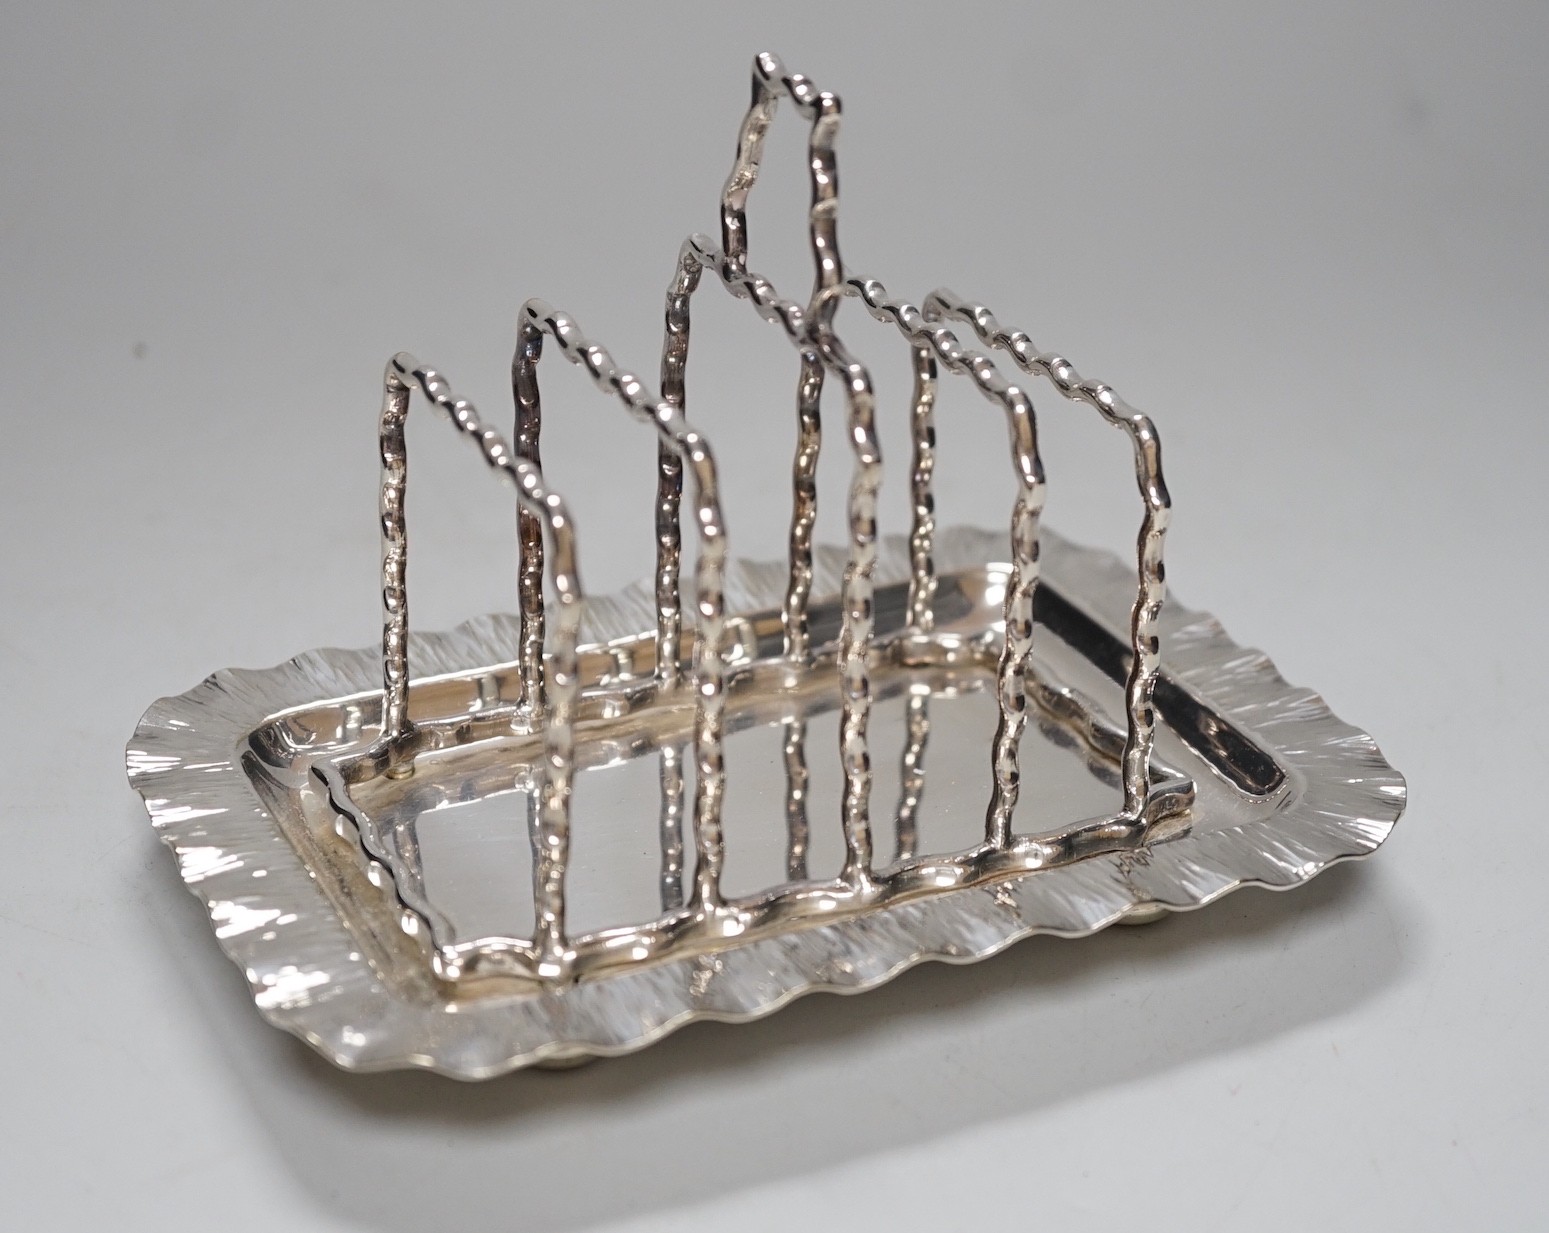 A Hukin & Heath silver plated toast rack, 16cm long